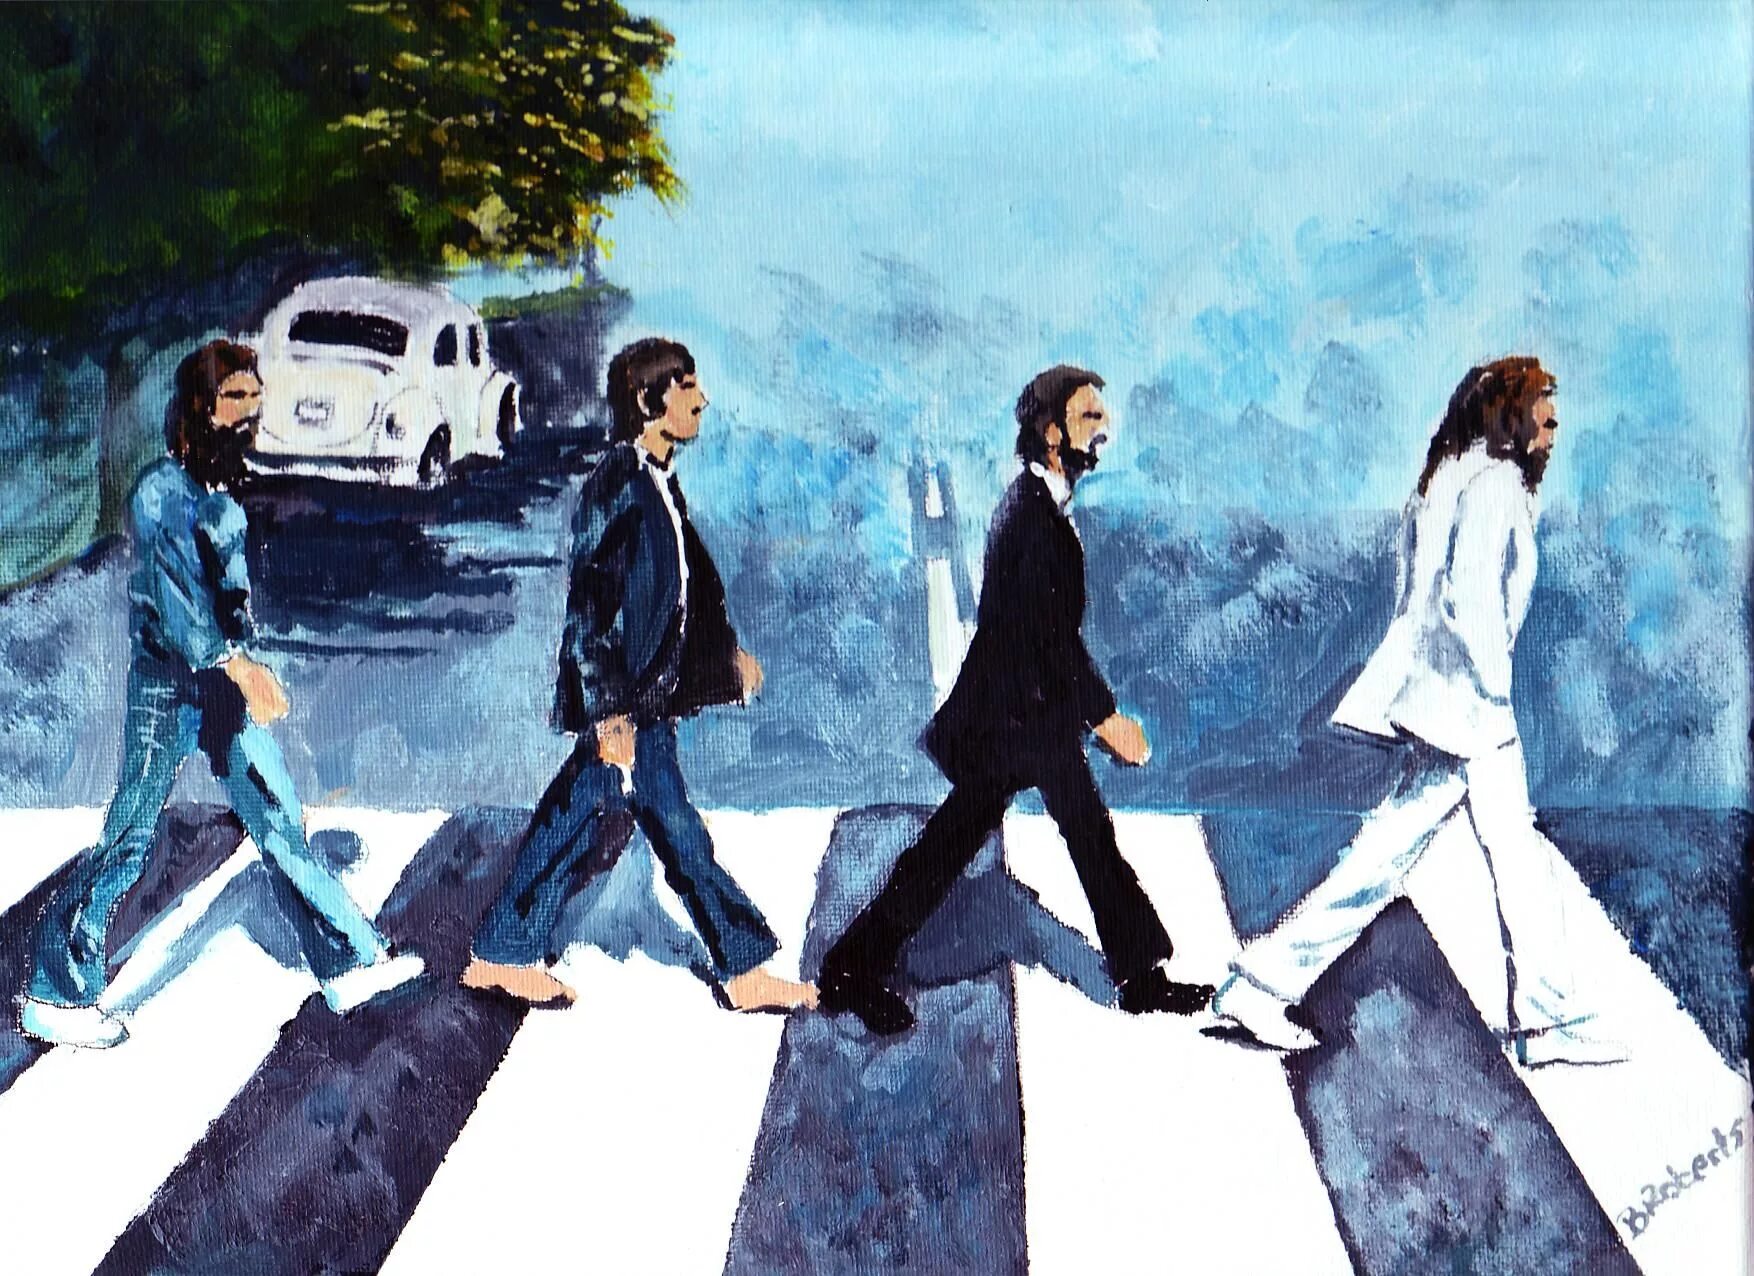 Битлз Abbey Road. Группа Битлз Эбби роуд. Битлз на переходе Эбби роуд. Битлз Эбби роад рисунок.